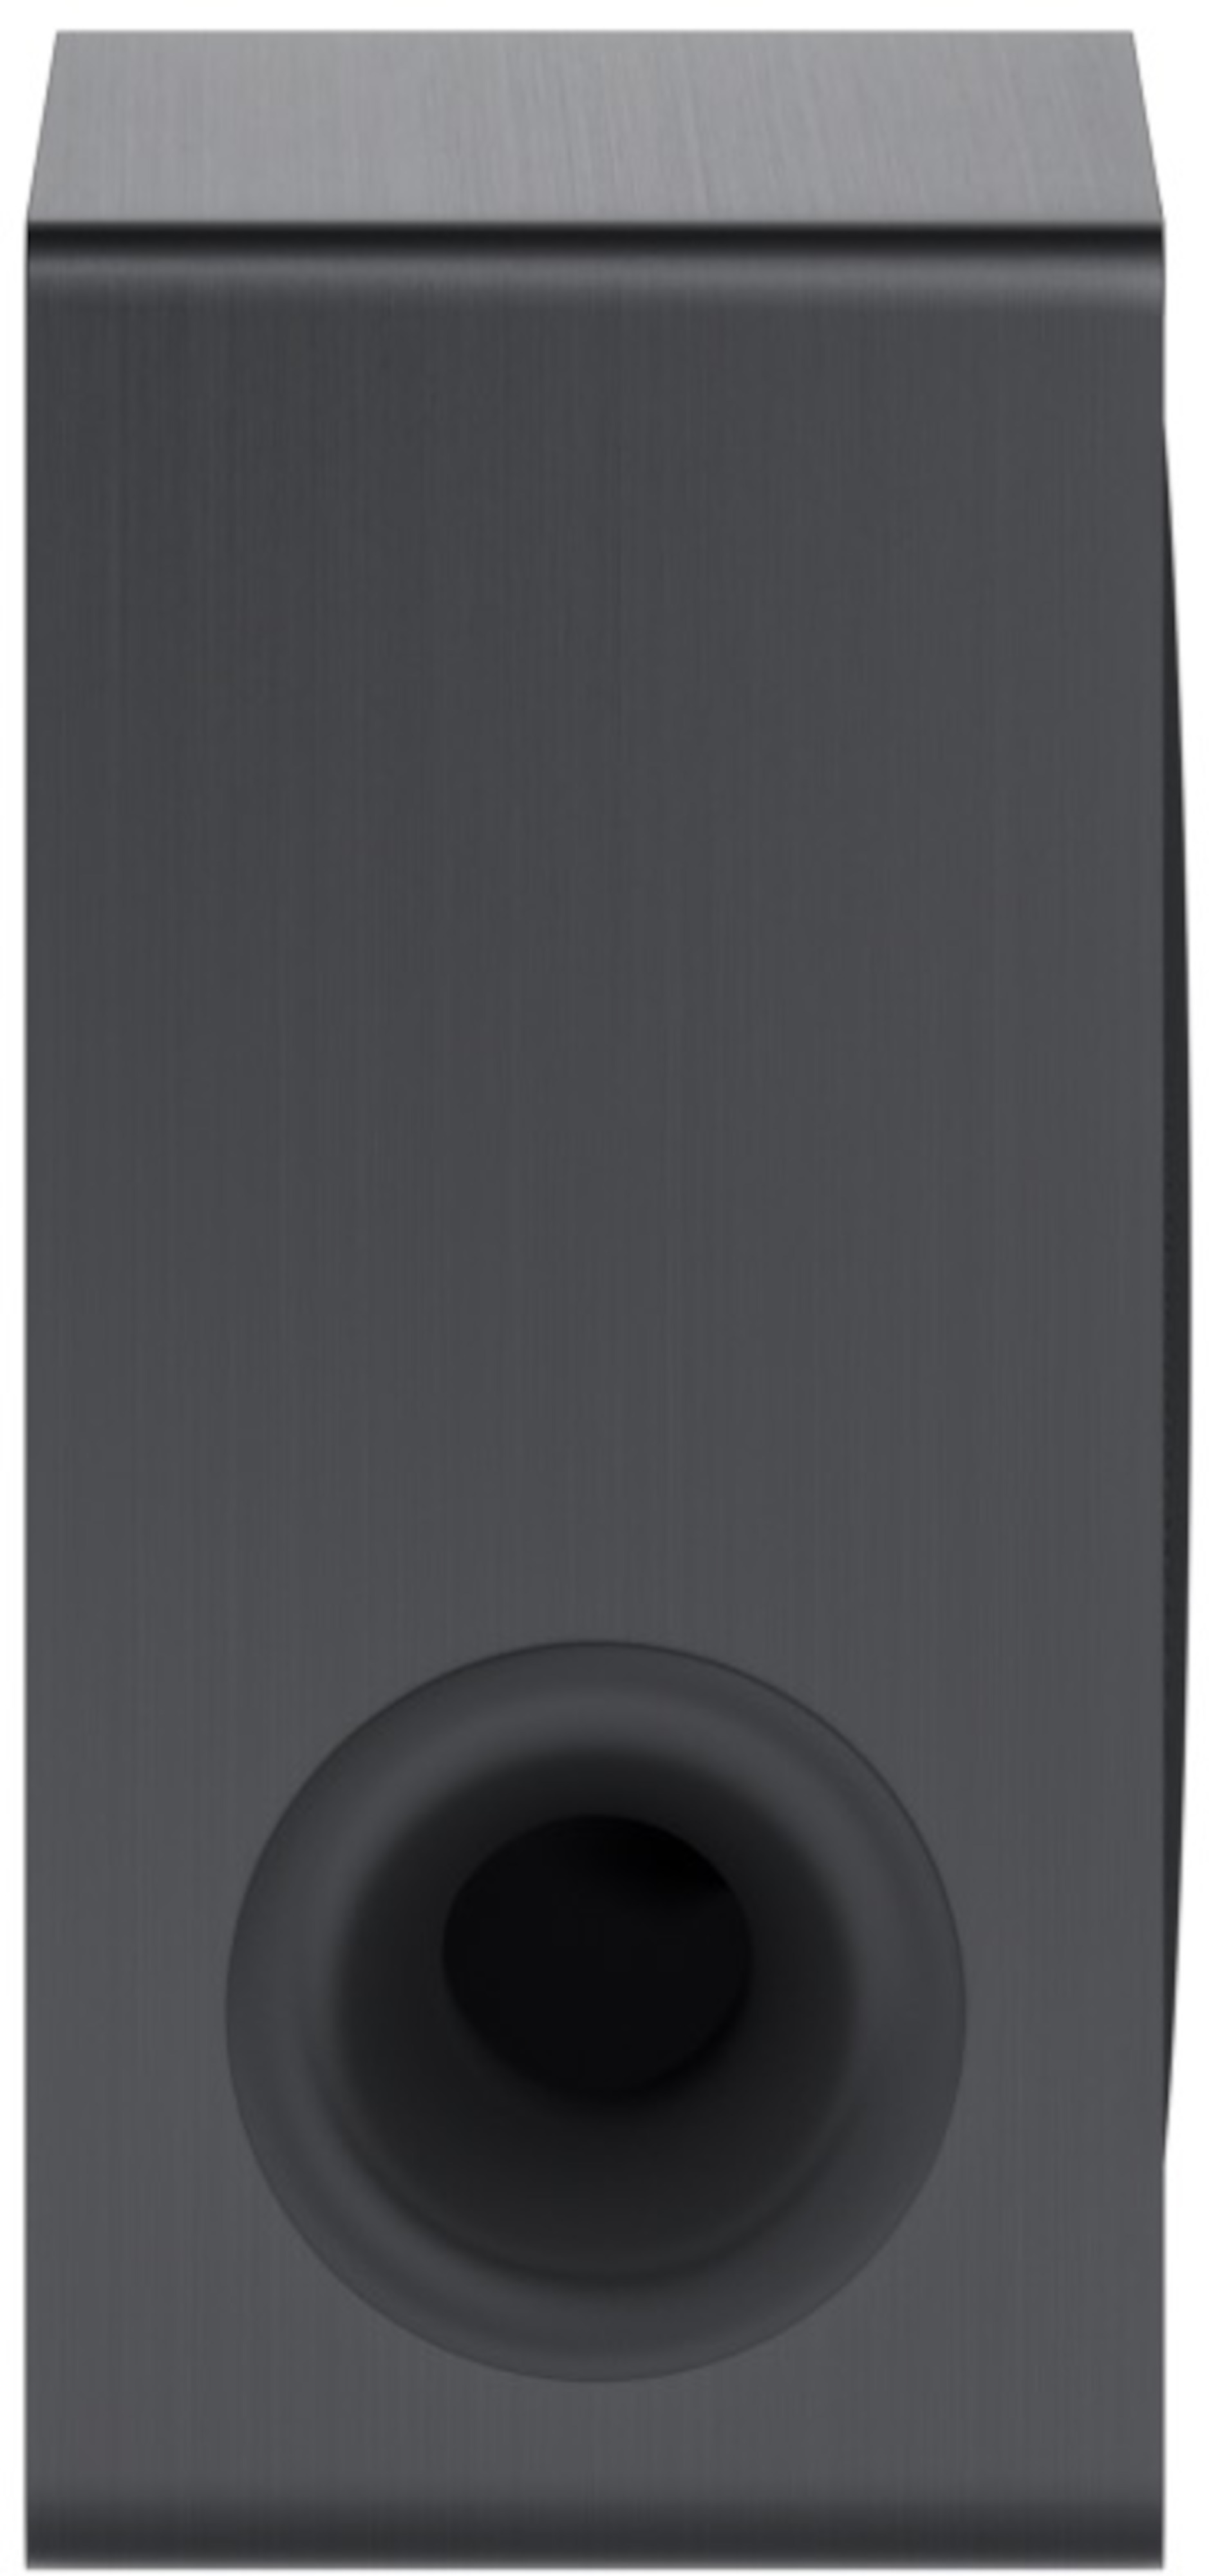 Soundbar, LG Steel Dark DS95QR, Silver